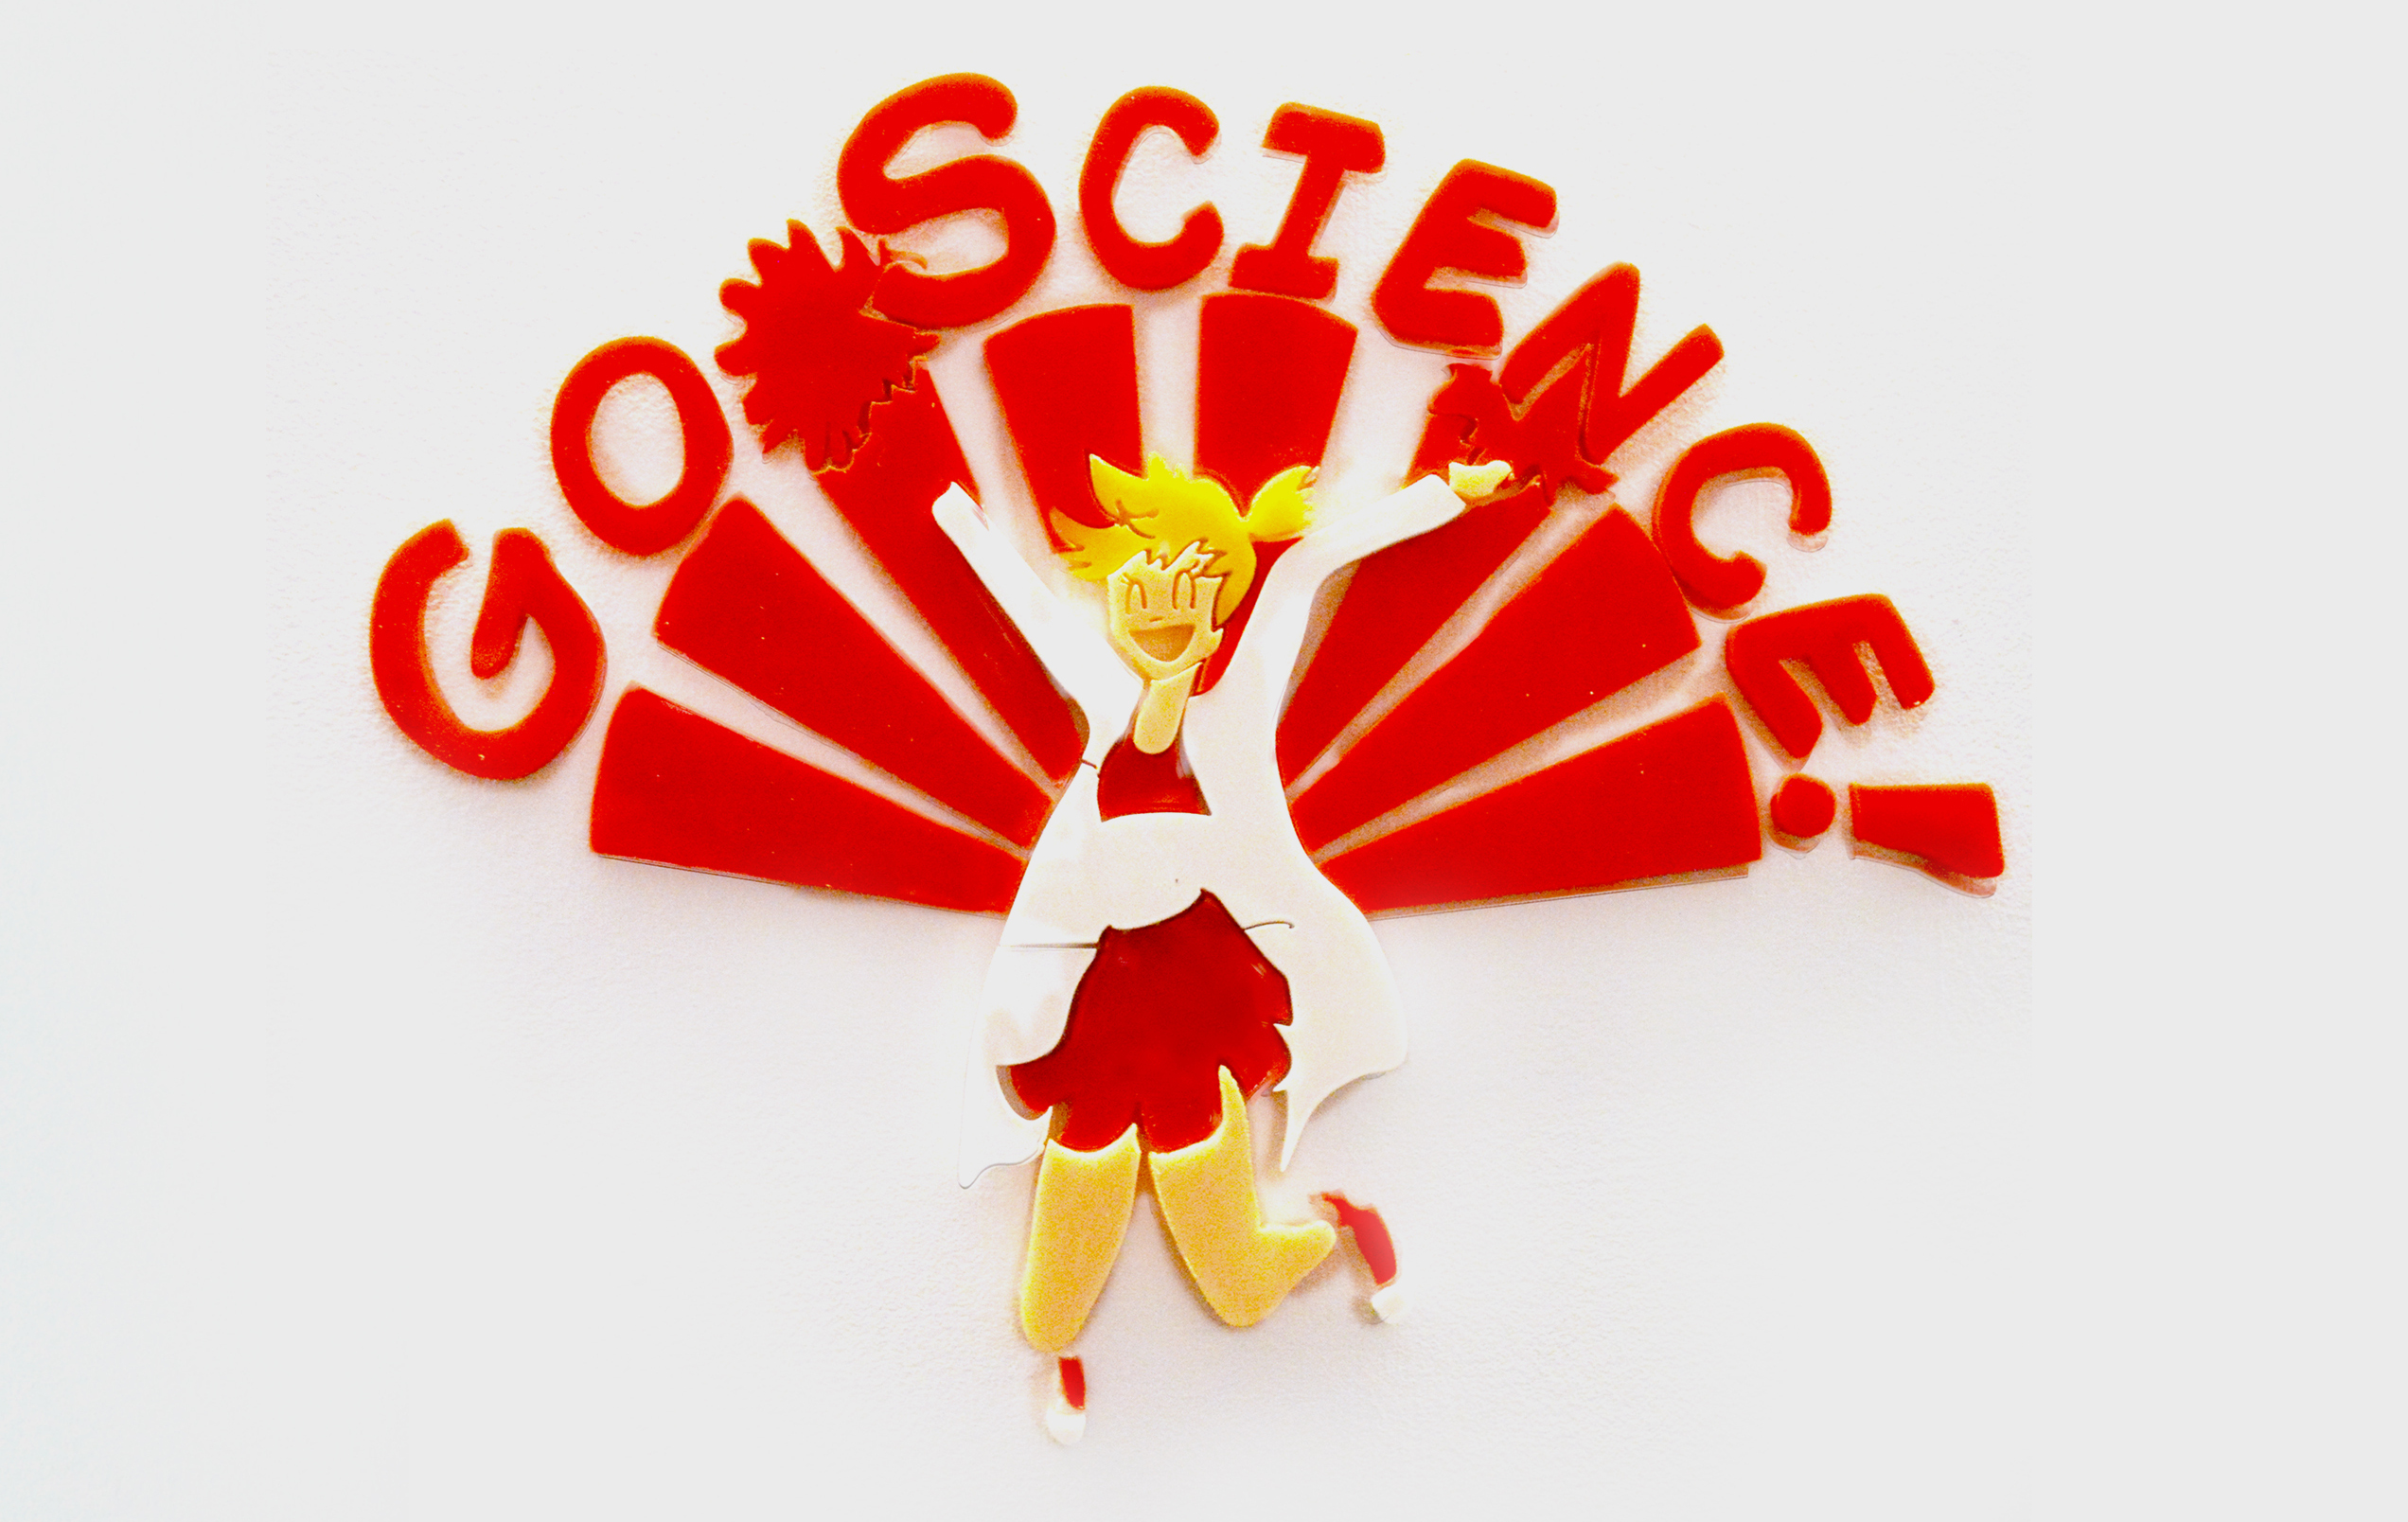 Go Science!